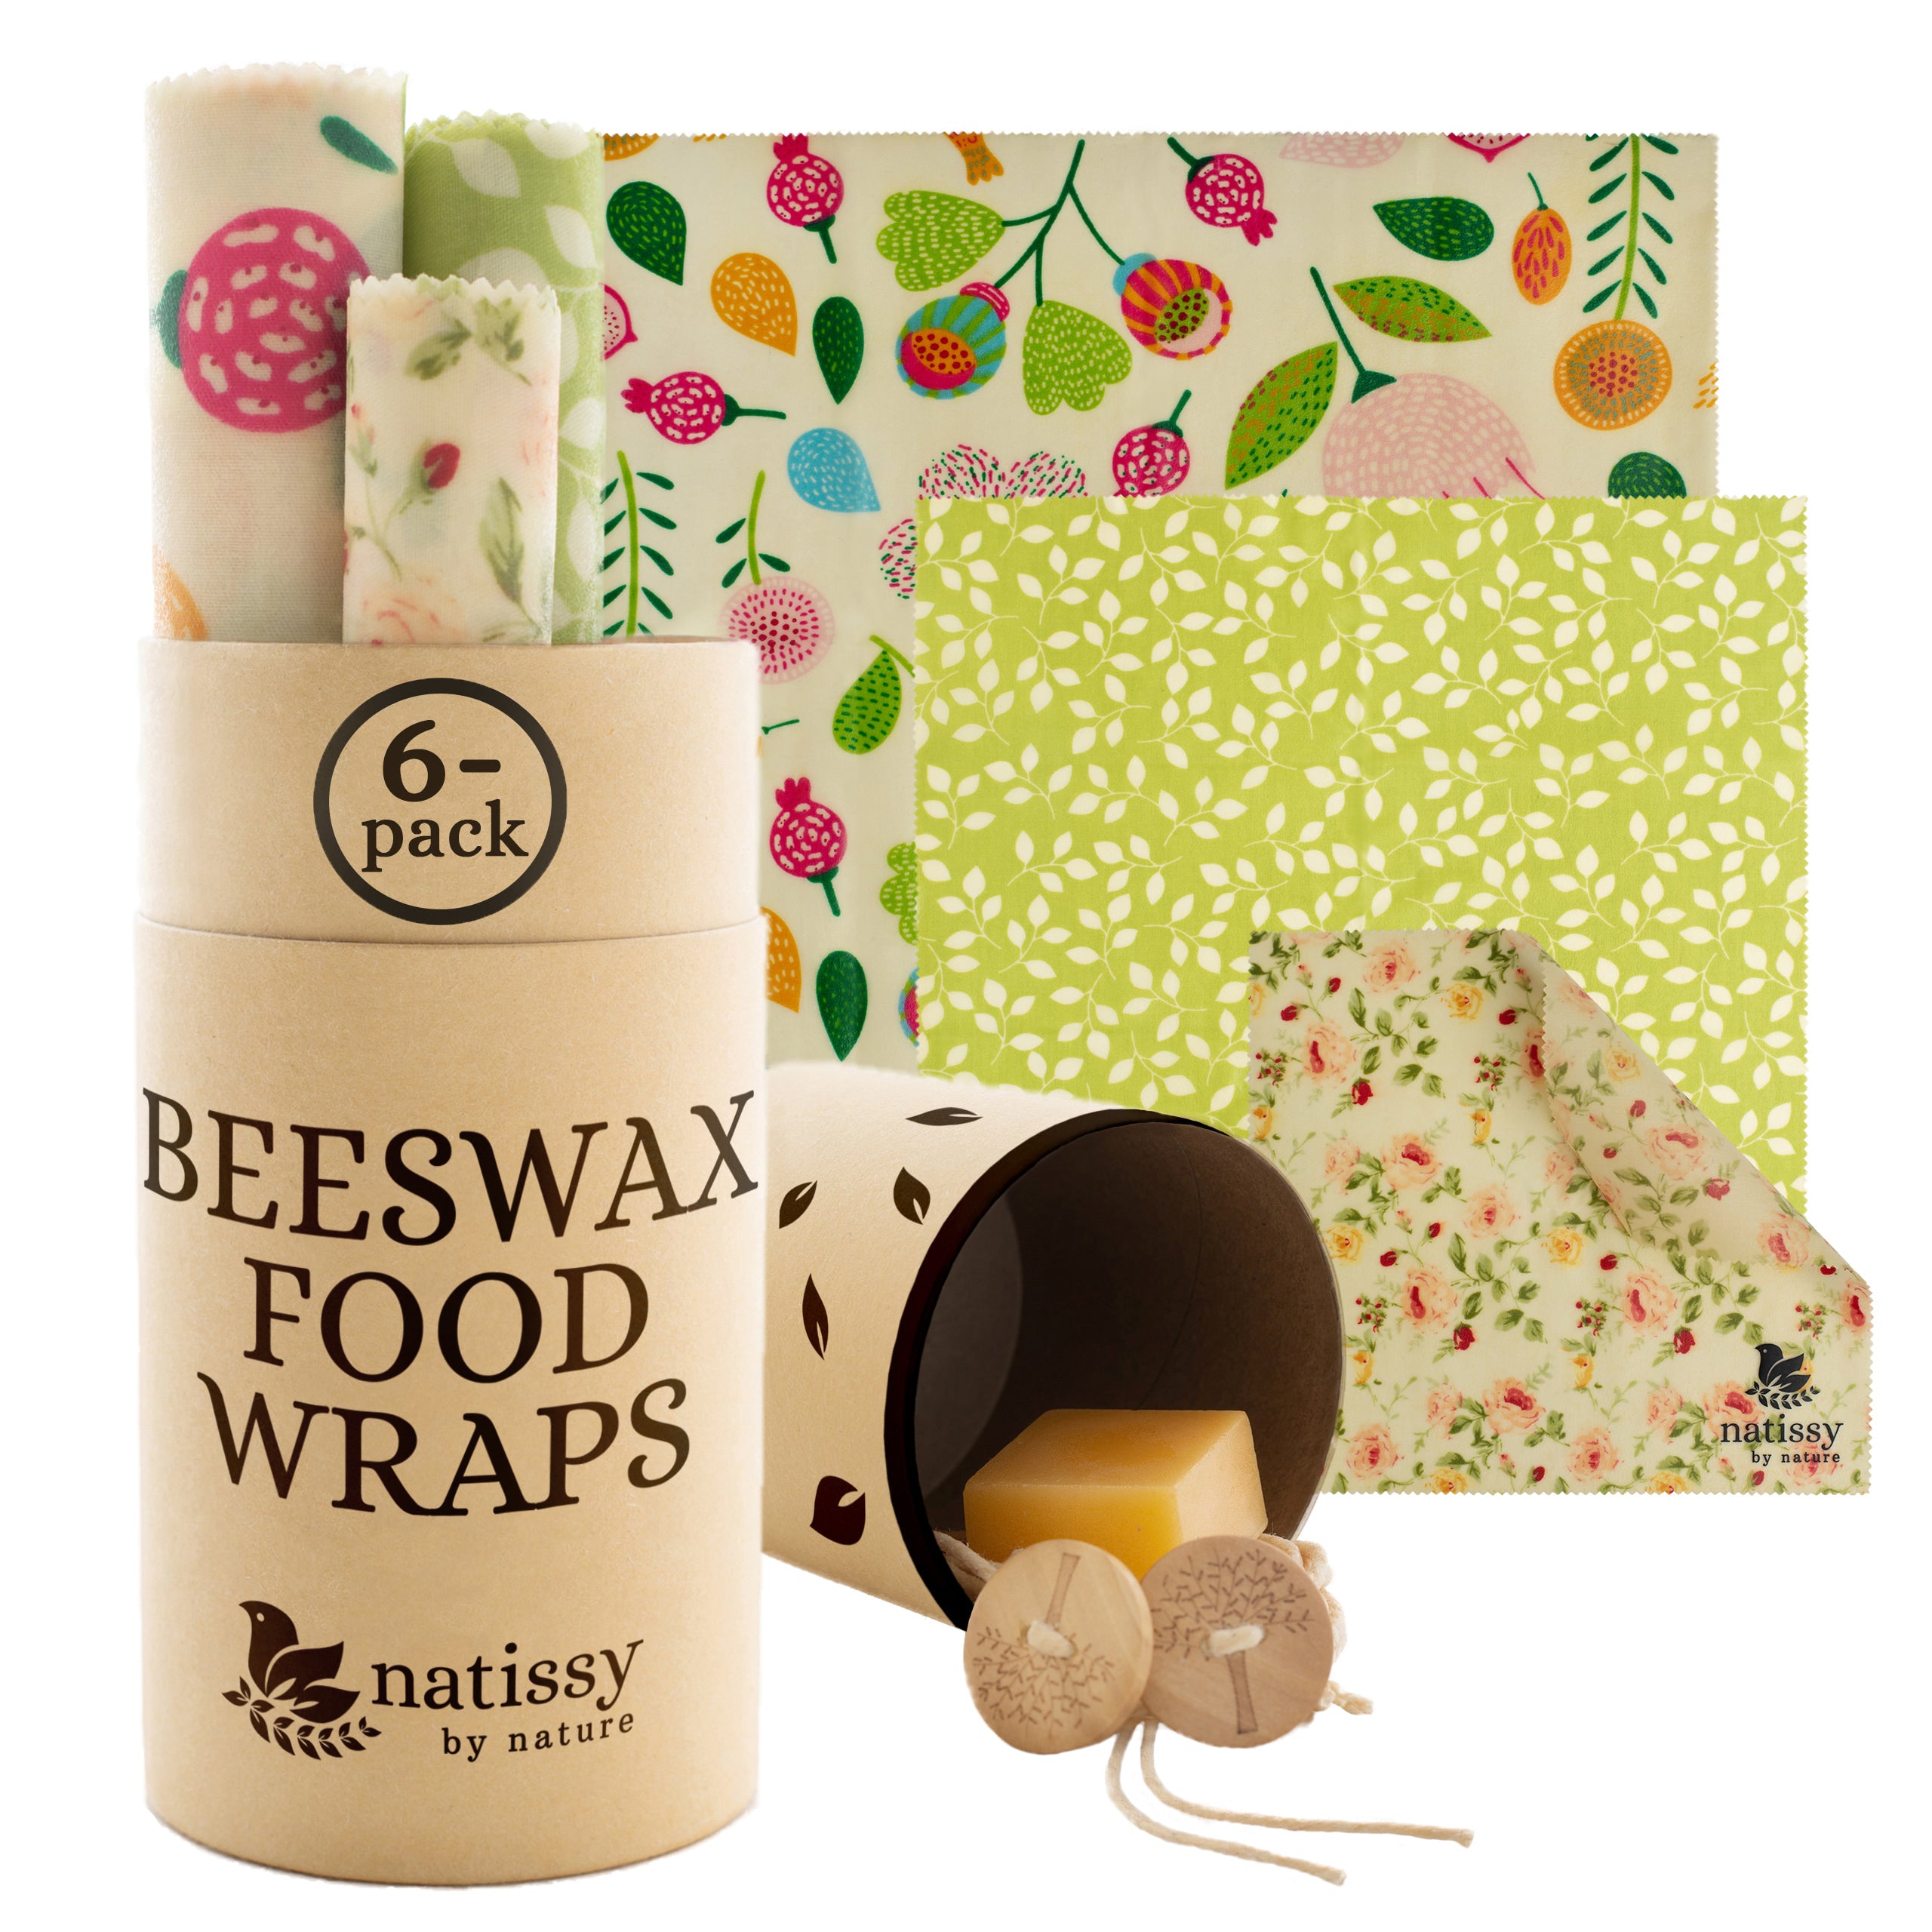 DIY Beeswax Wraps - Make these Easy Reusable Food Wraps